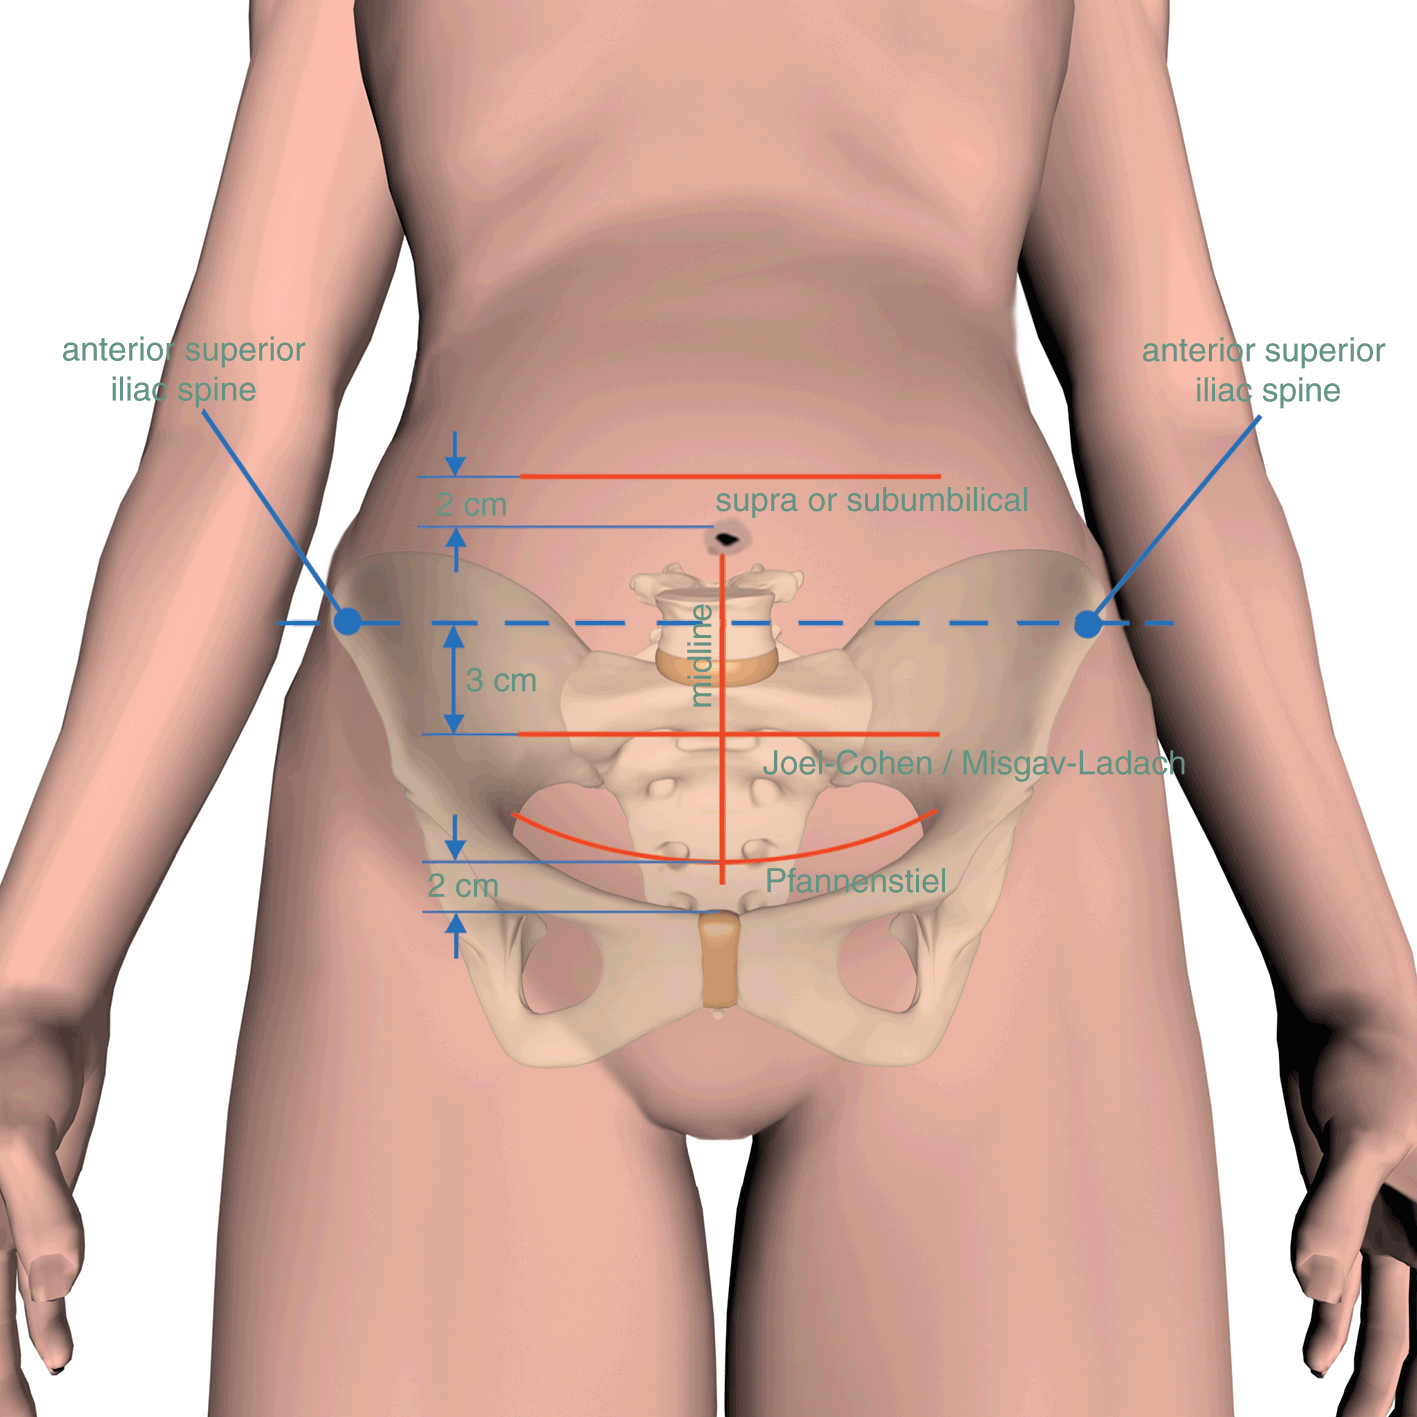 transverse presentation cesarean section